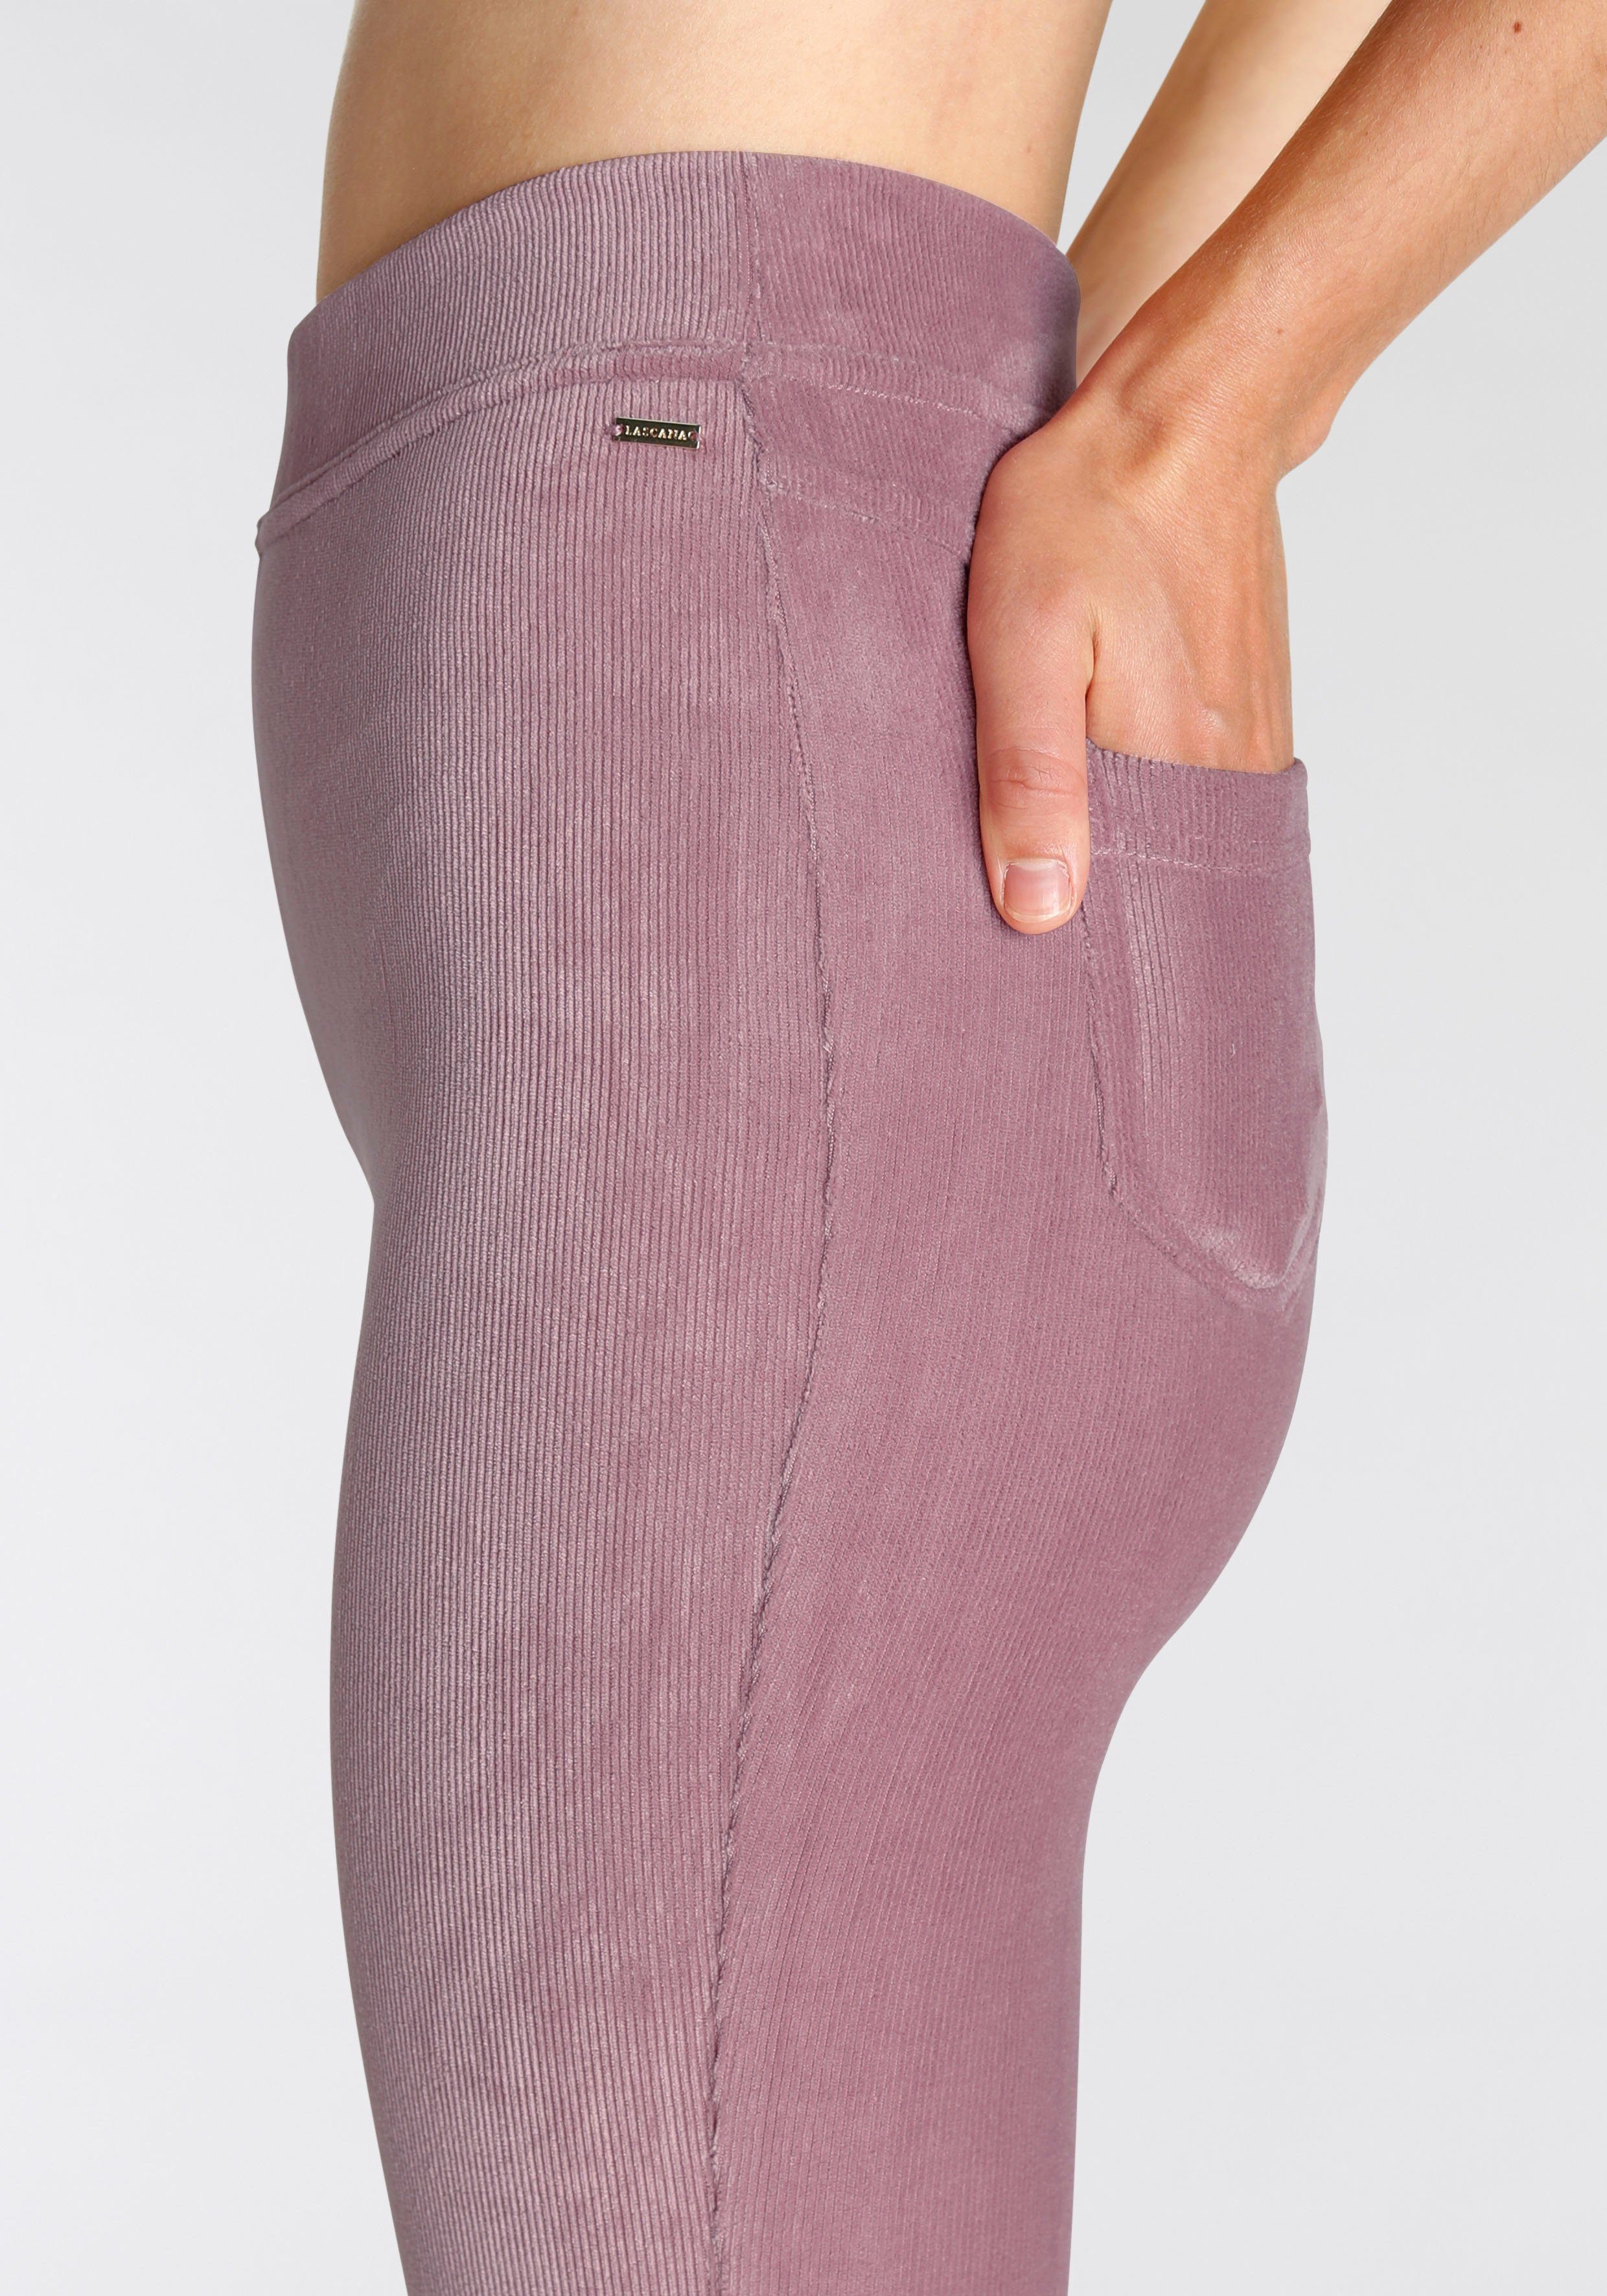 Loungewear weichem Cord-Optik, aus in Jazzpants LASCANA rosa Material